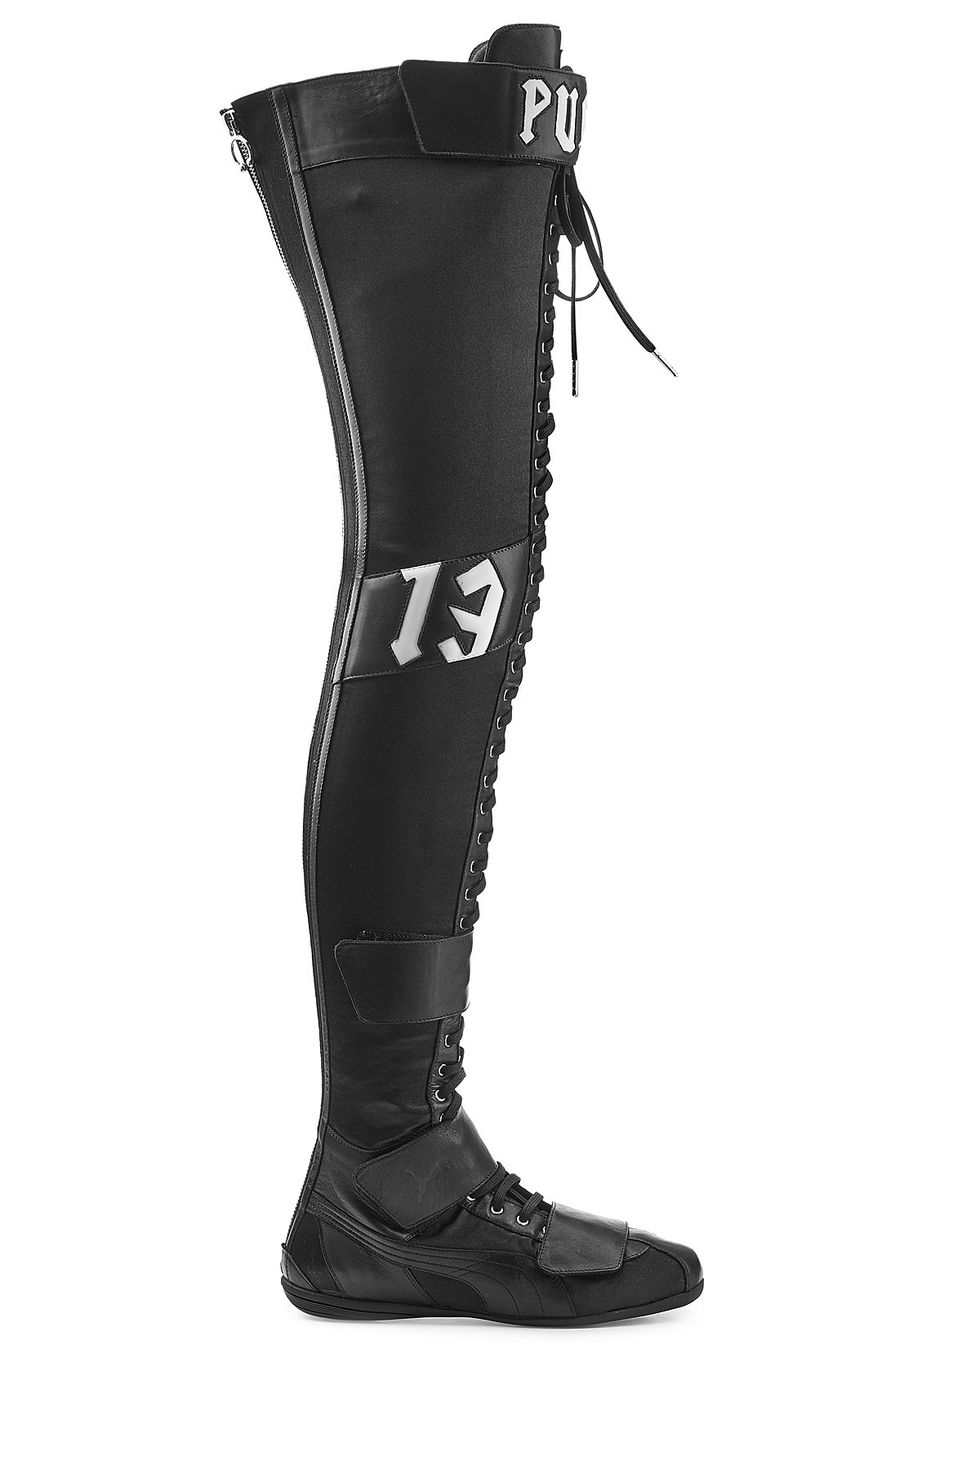 Puma Fenty Rhianna Runway Thigh High Suede Over The Knee Boots